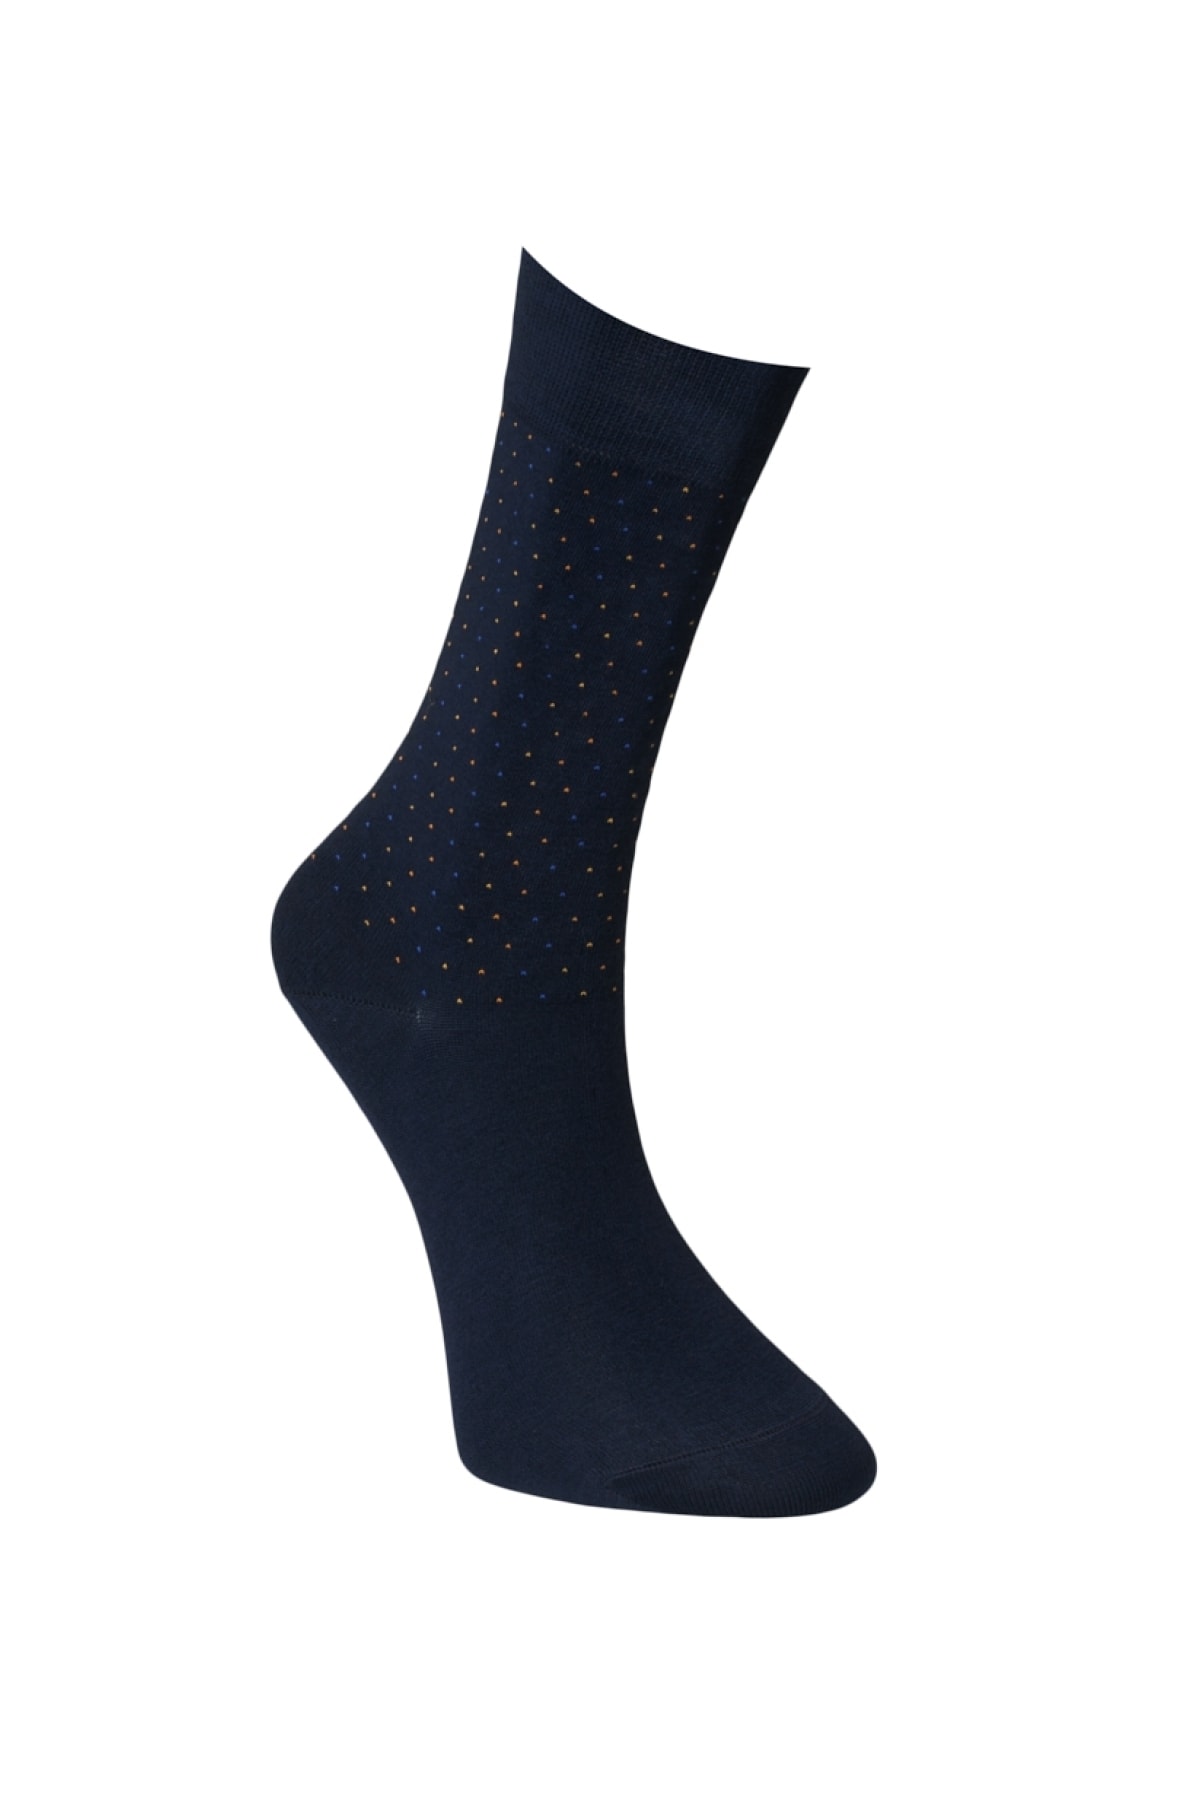 ALTINYILDIZ CLASSICS Men's Navy Blue Patterned Navy Blue Bamboo Casual Socks.